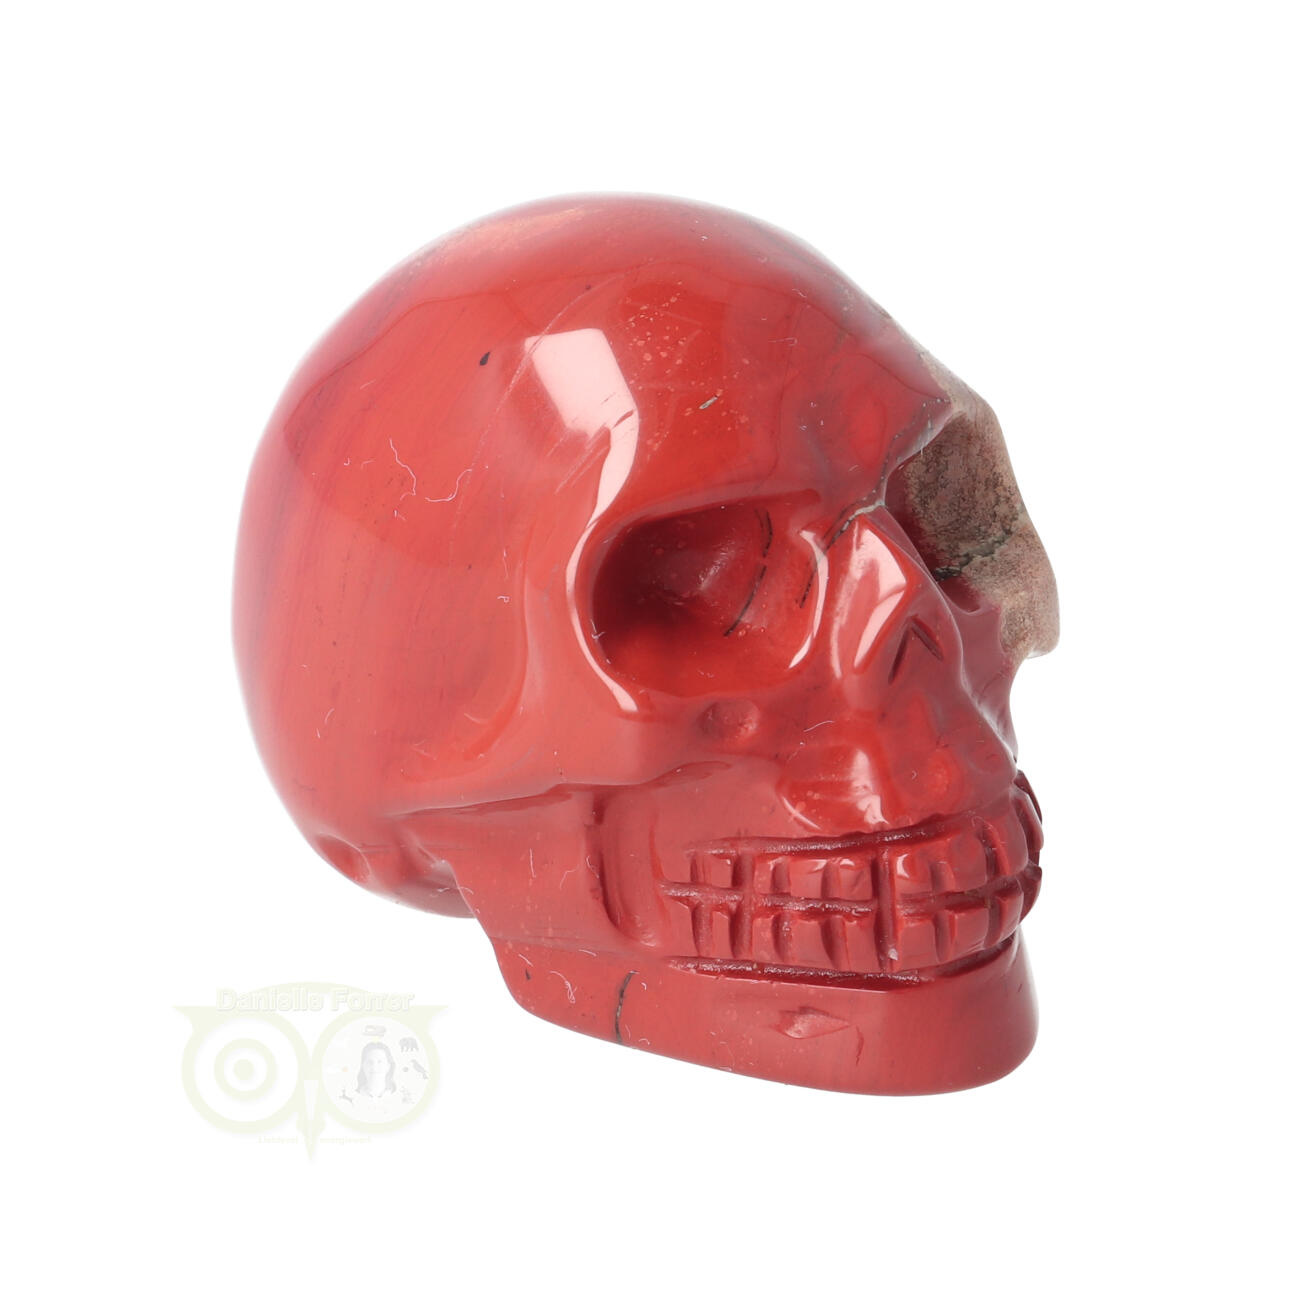 Rode Jaspis schedel Nr | Kleine Edelstenen schedel kopen - Edelstenen Webwinkel Webshop Danielle Forrer